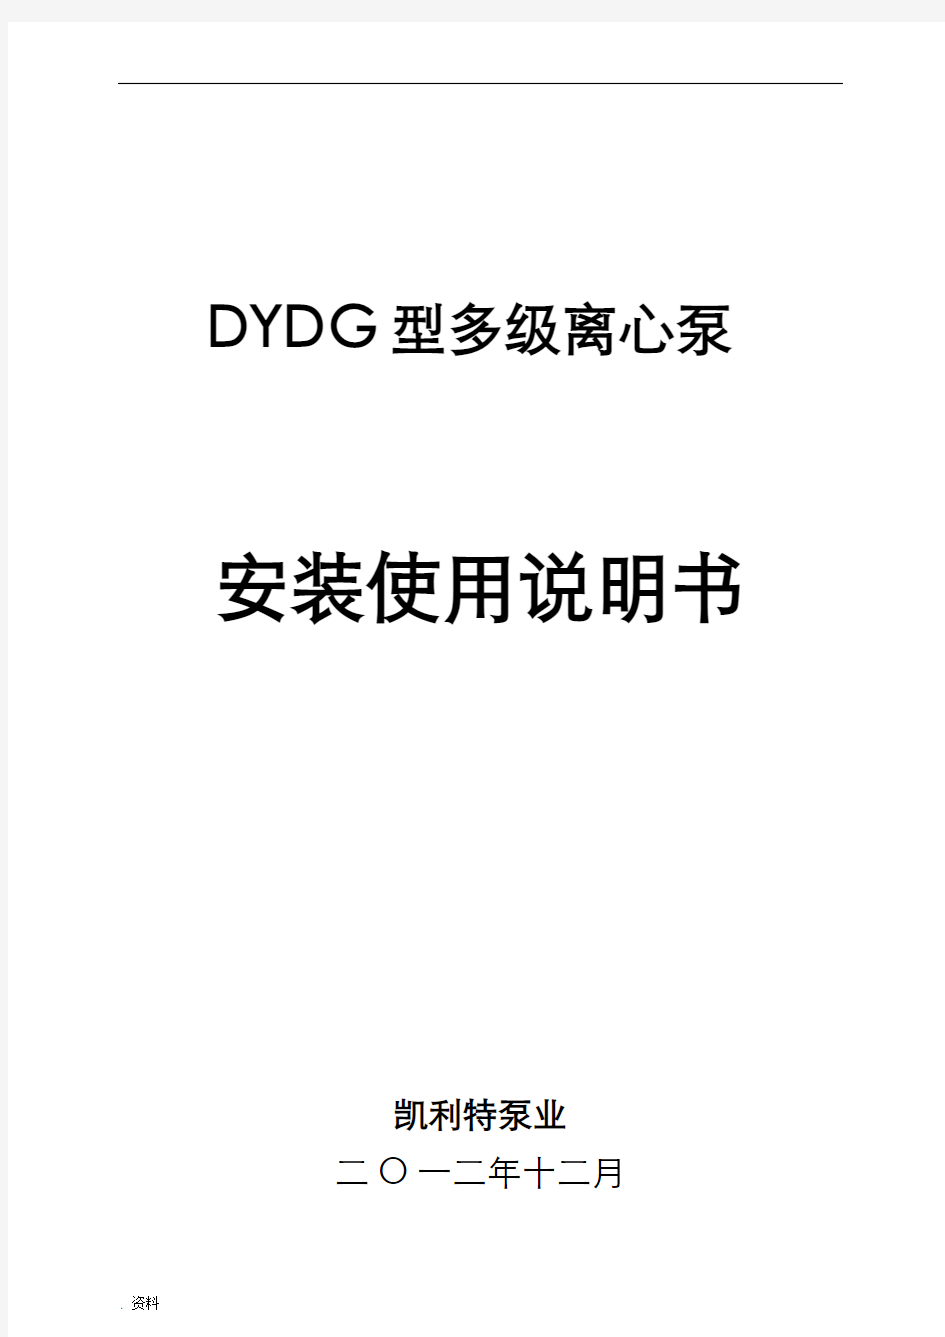 DYDG型卧式多级离心泵安装使用说明书